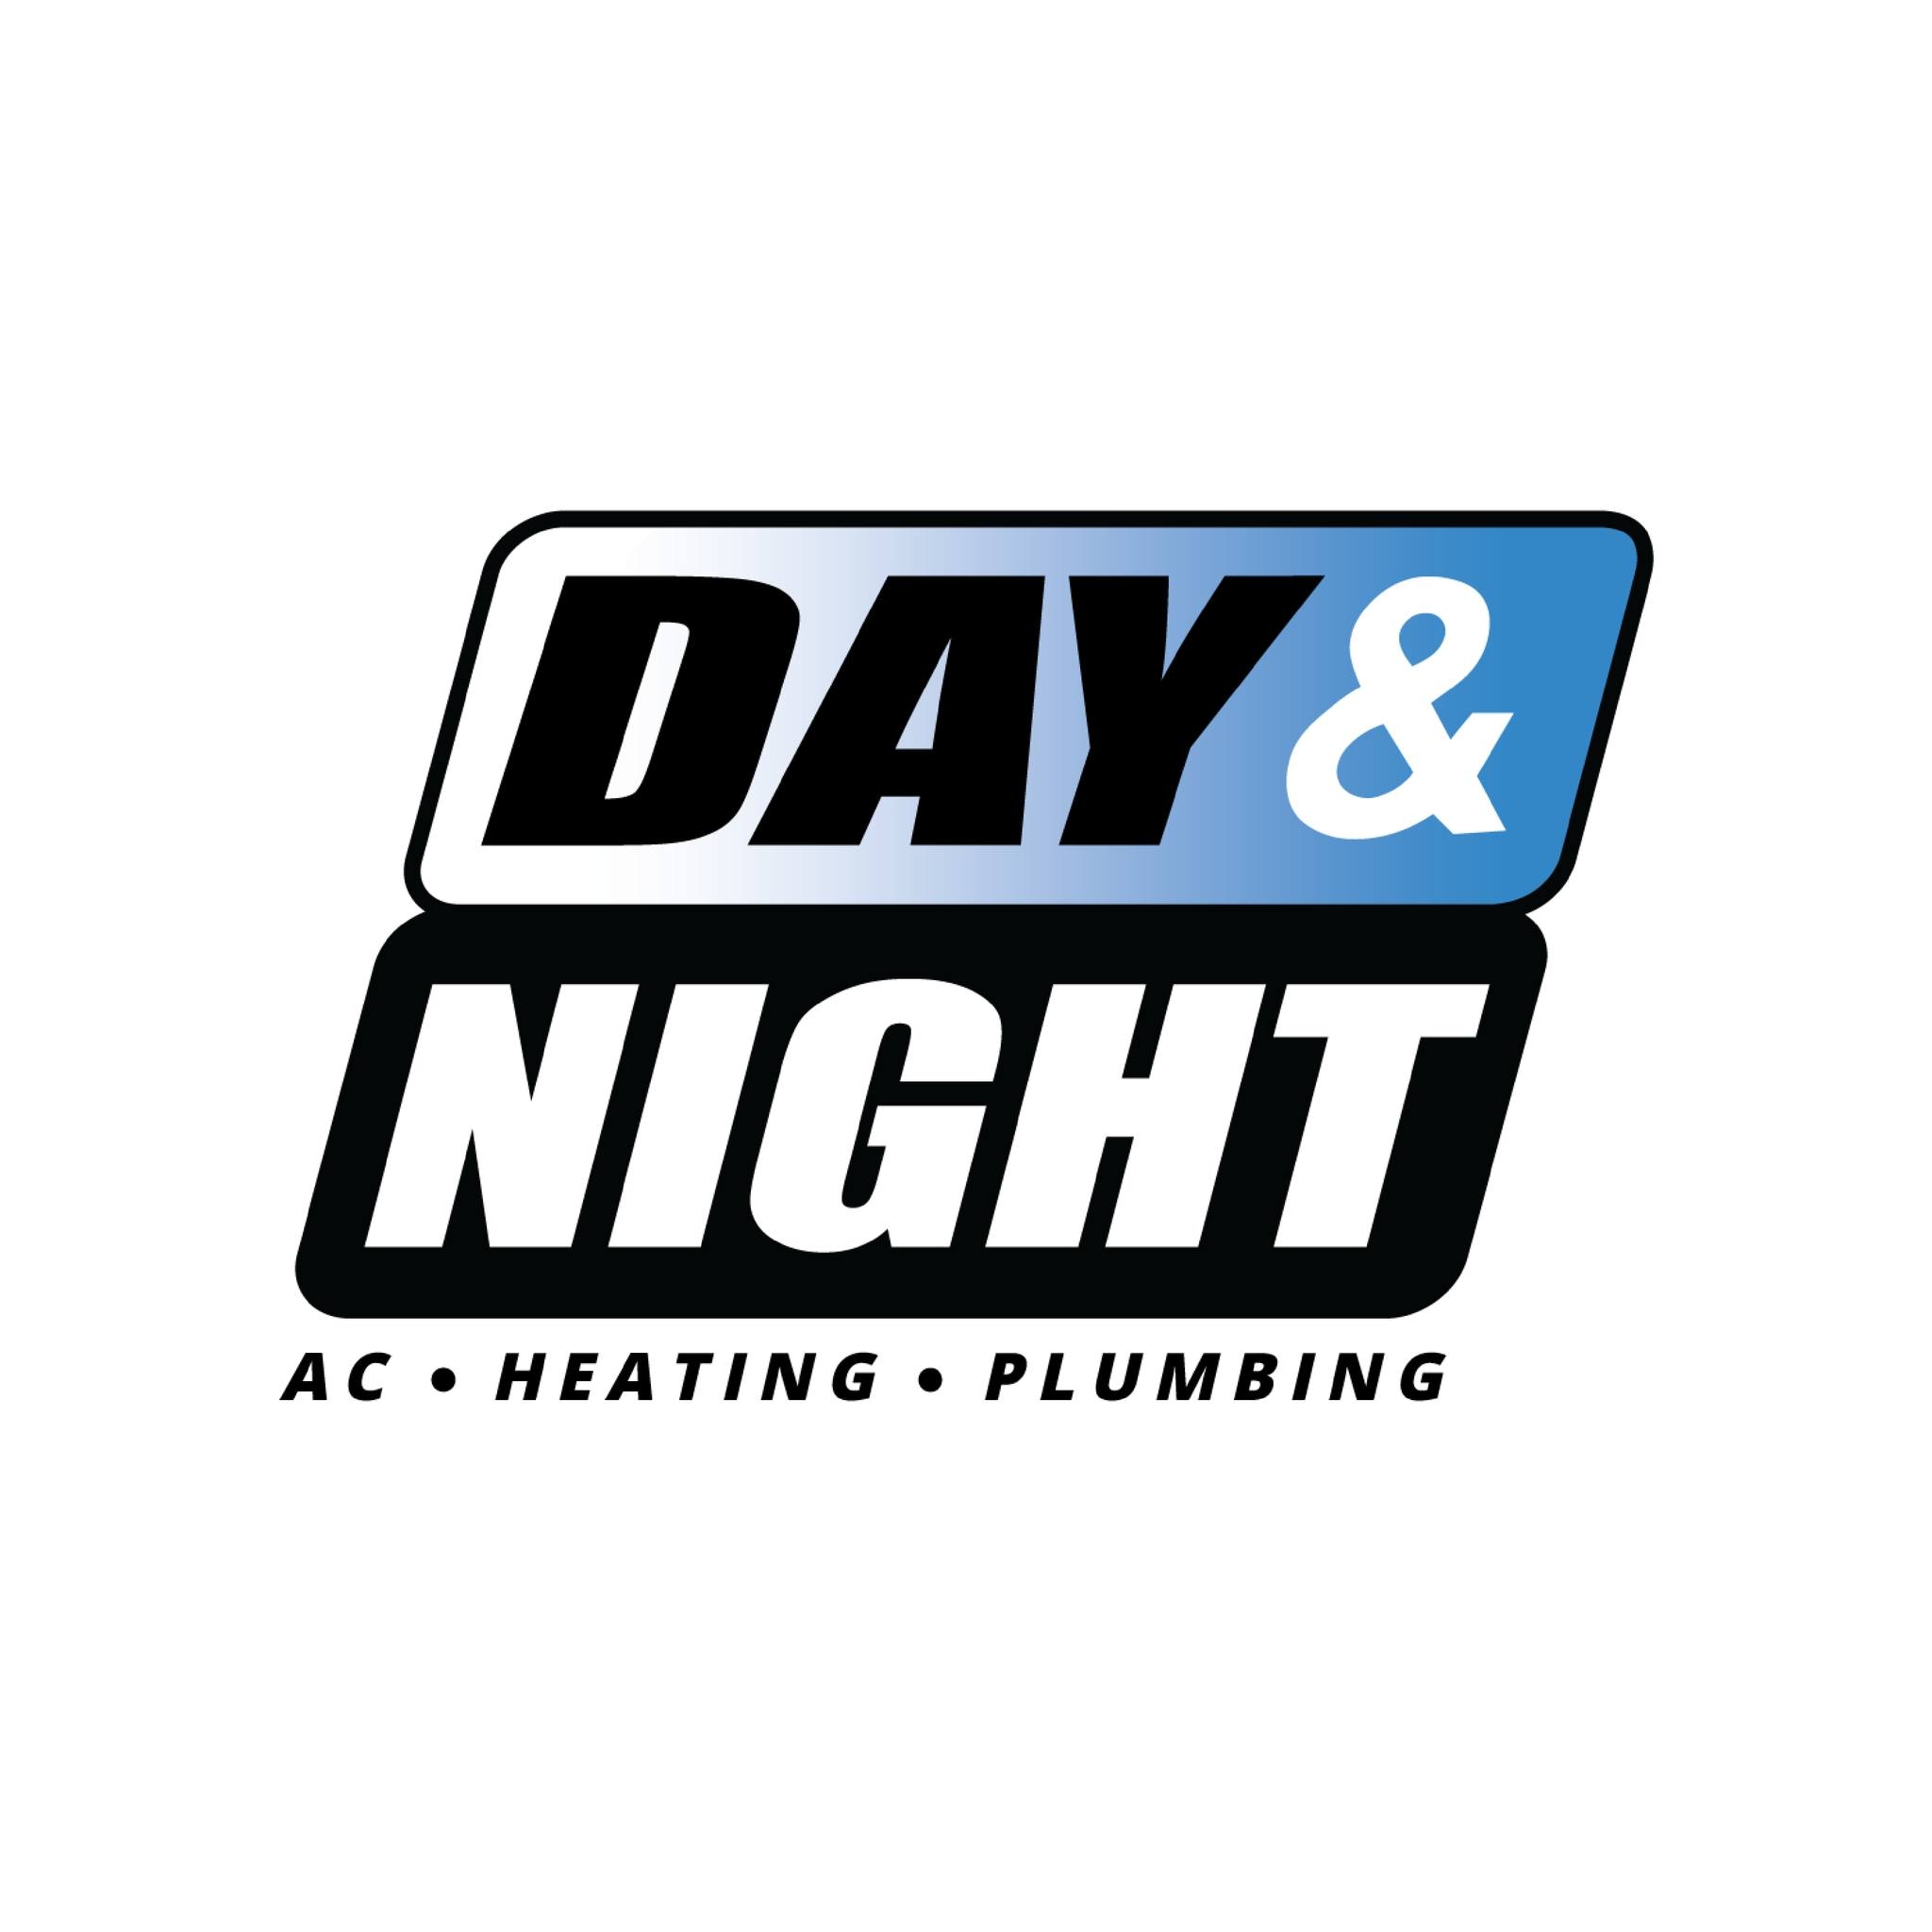 Day & Night Air Conditioning, Heating, & Plumbing